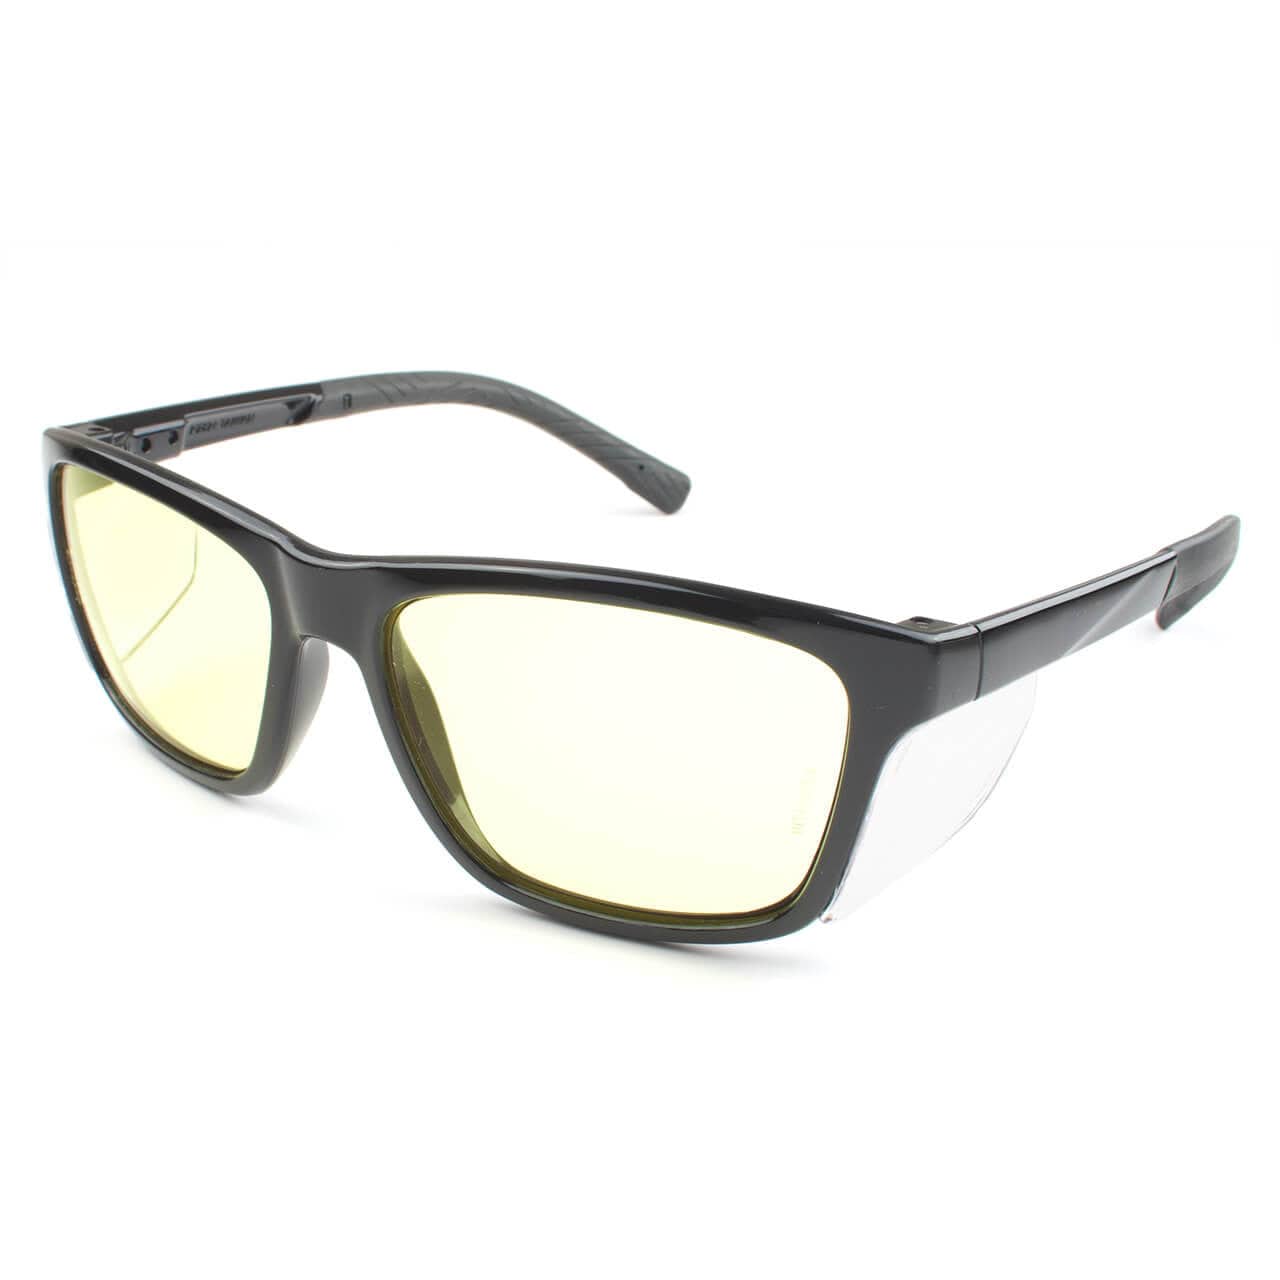 Metel M40 Safety Glasses with Black Frame and UV400 Blue Block Lenses